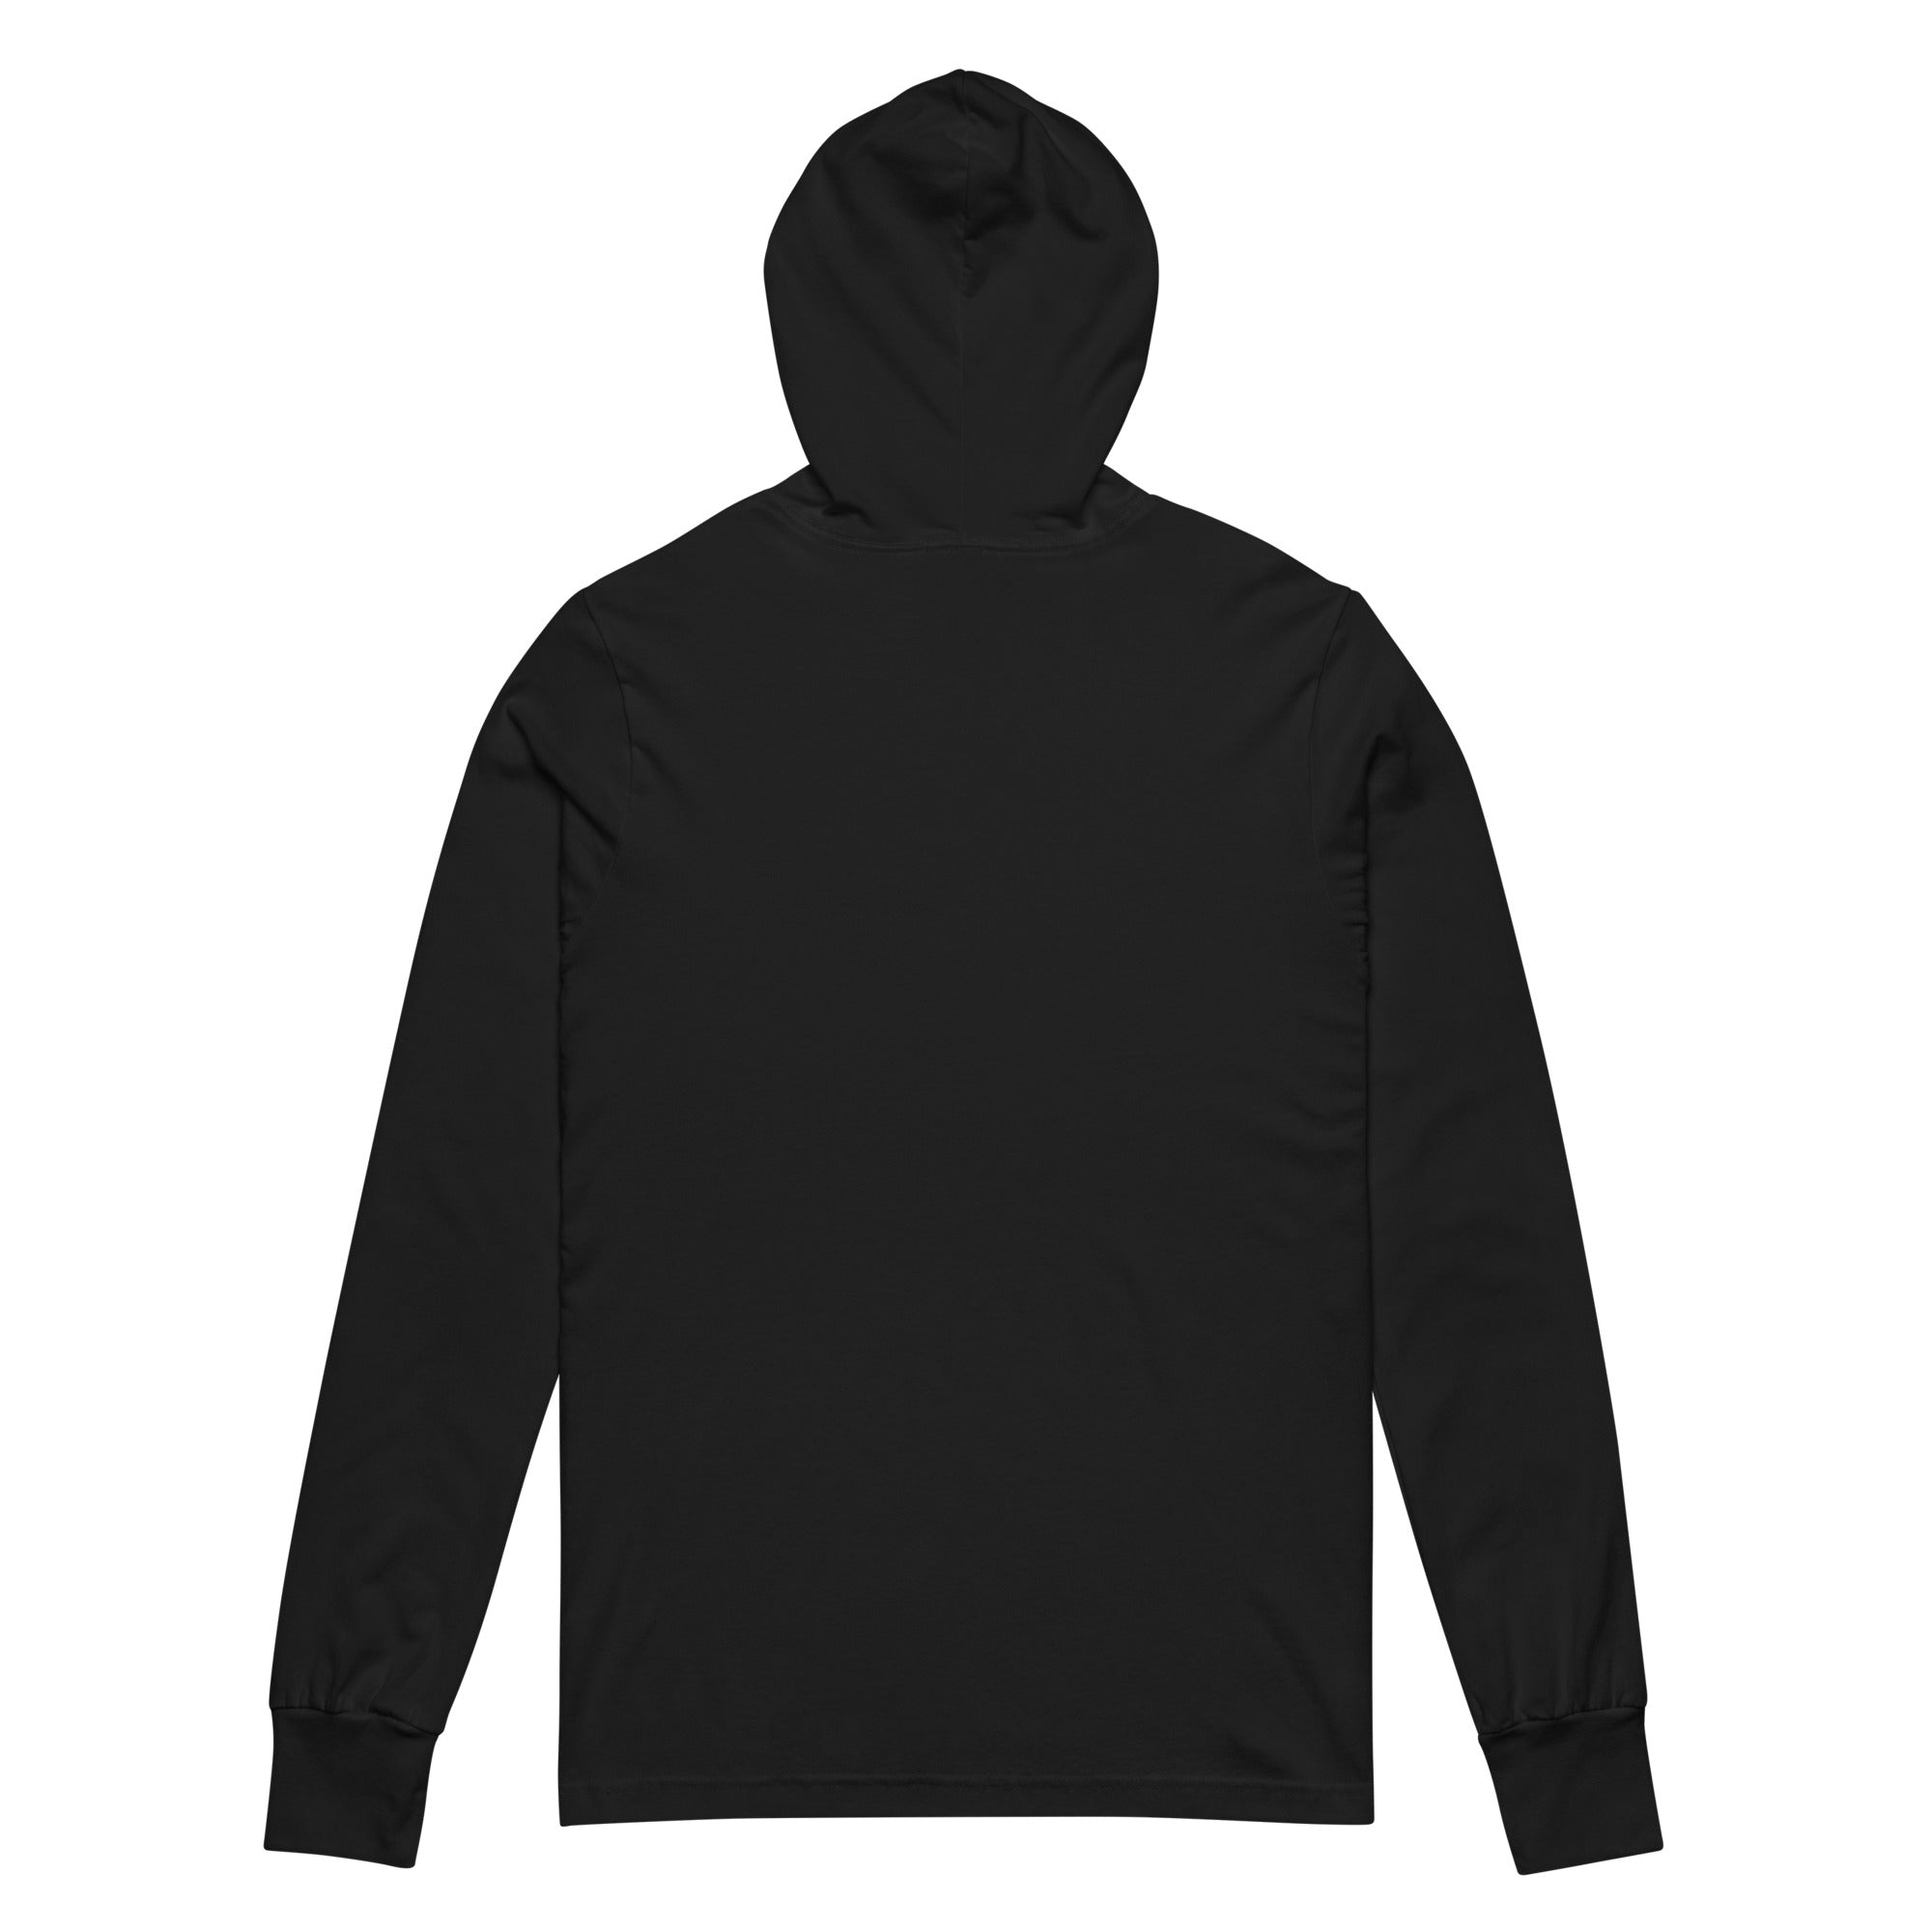 unisex-hooded-long-sleeve-tee-black-back-65bd35a1a9654.jpg